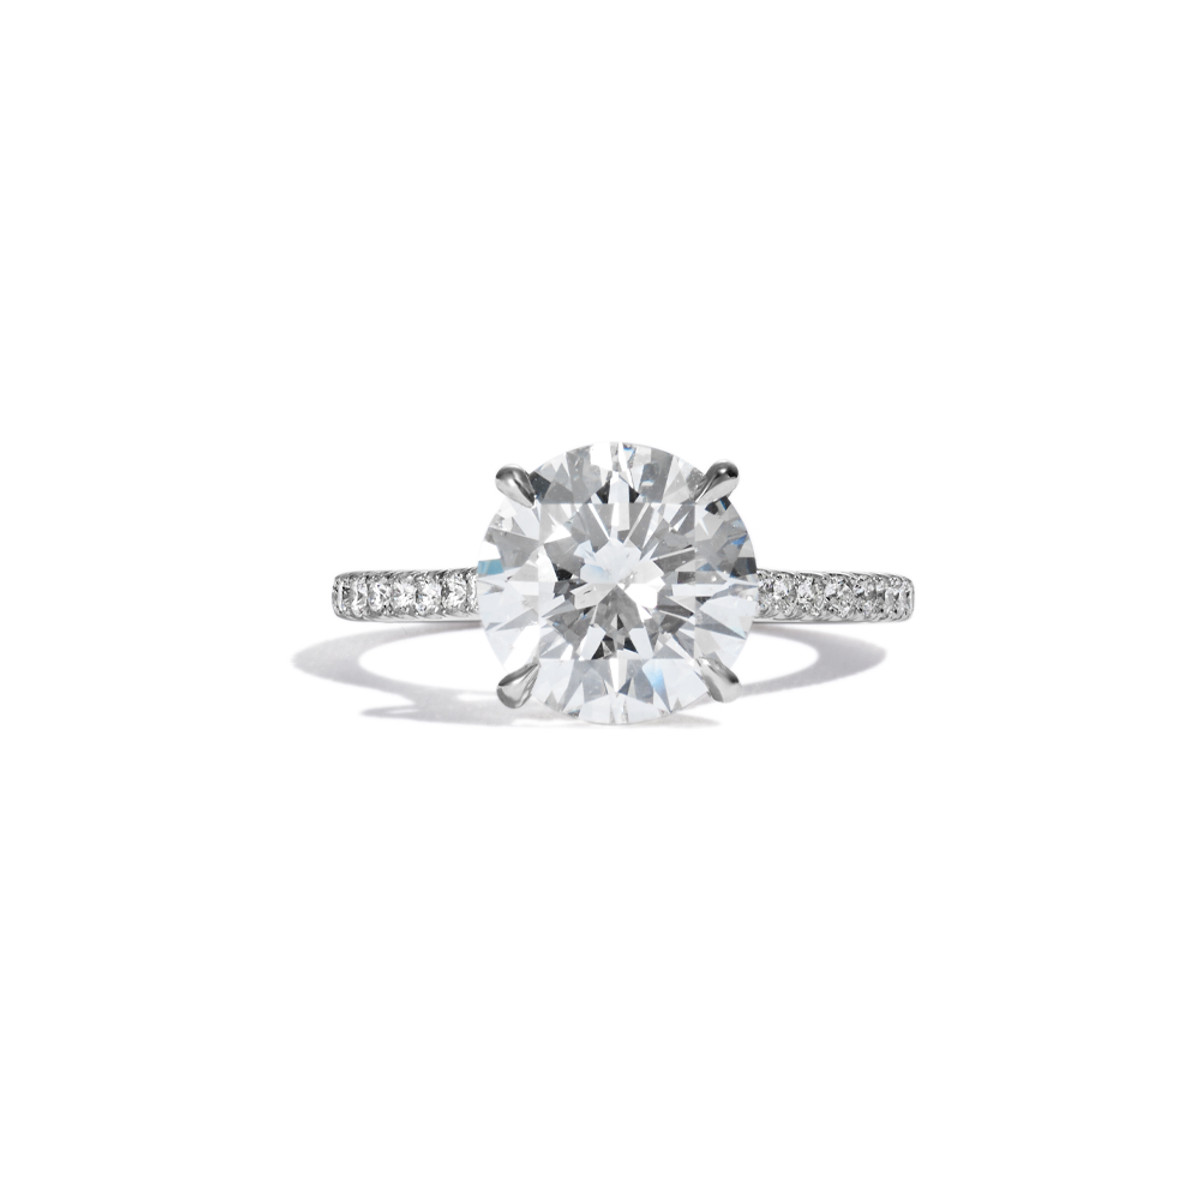 Hyde Park Platinum 3.12ct Round Diamond Halo Engagement Ring-49027 Product Image